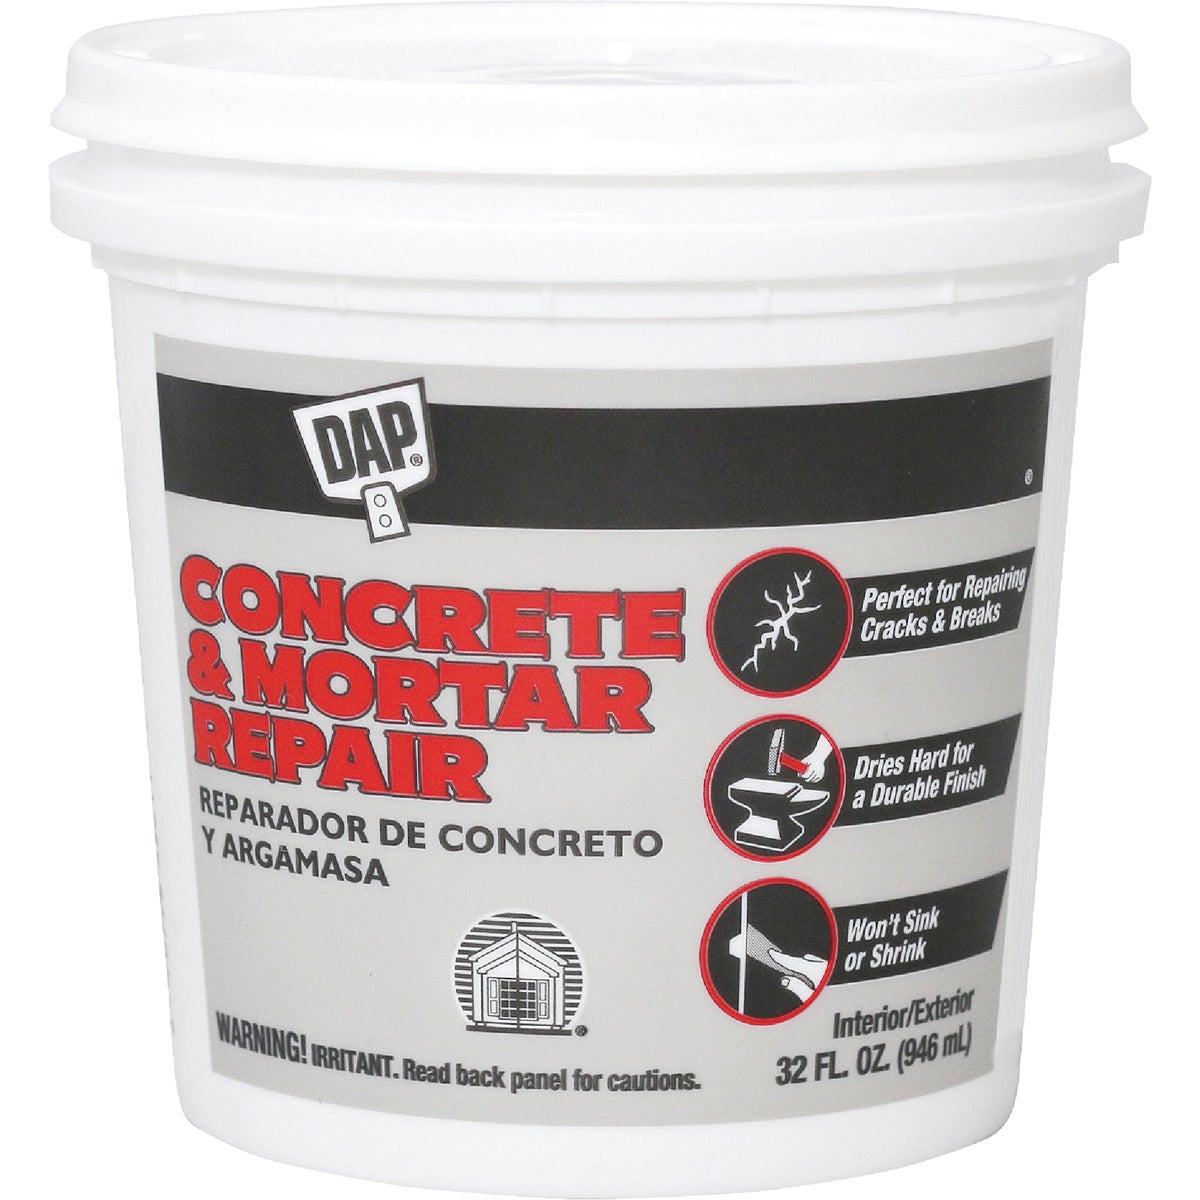 Dap Bondex 1 Qt Pre Mixed Gray Concrete Patch